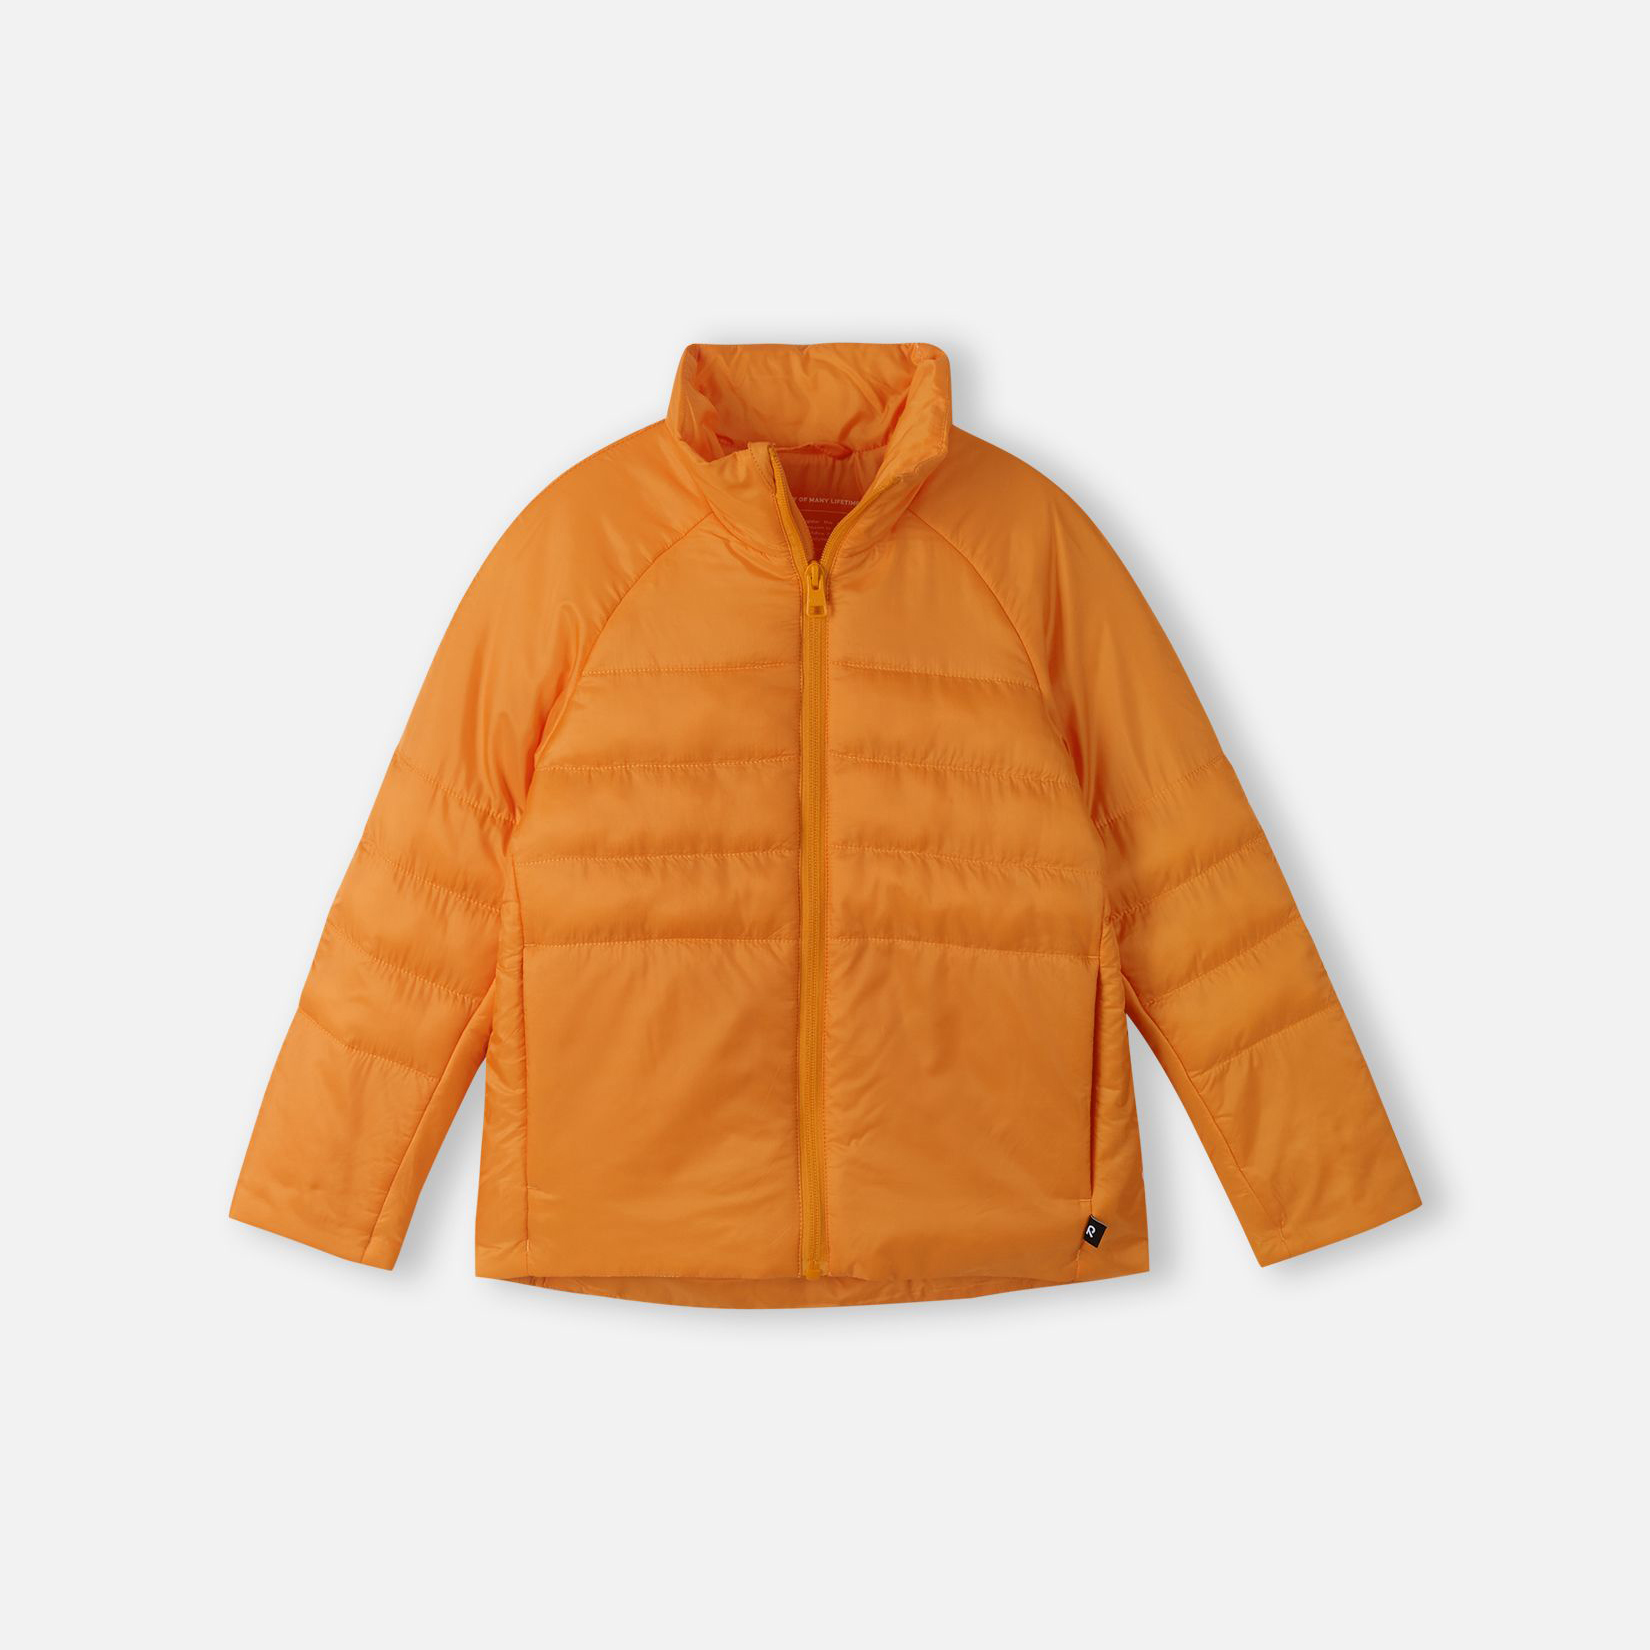 Акция на Дитяча демісезонна термо куртка для хлопчика Reima Seuraan 5100097A-2450 116 см от Rozetka